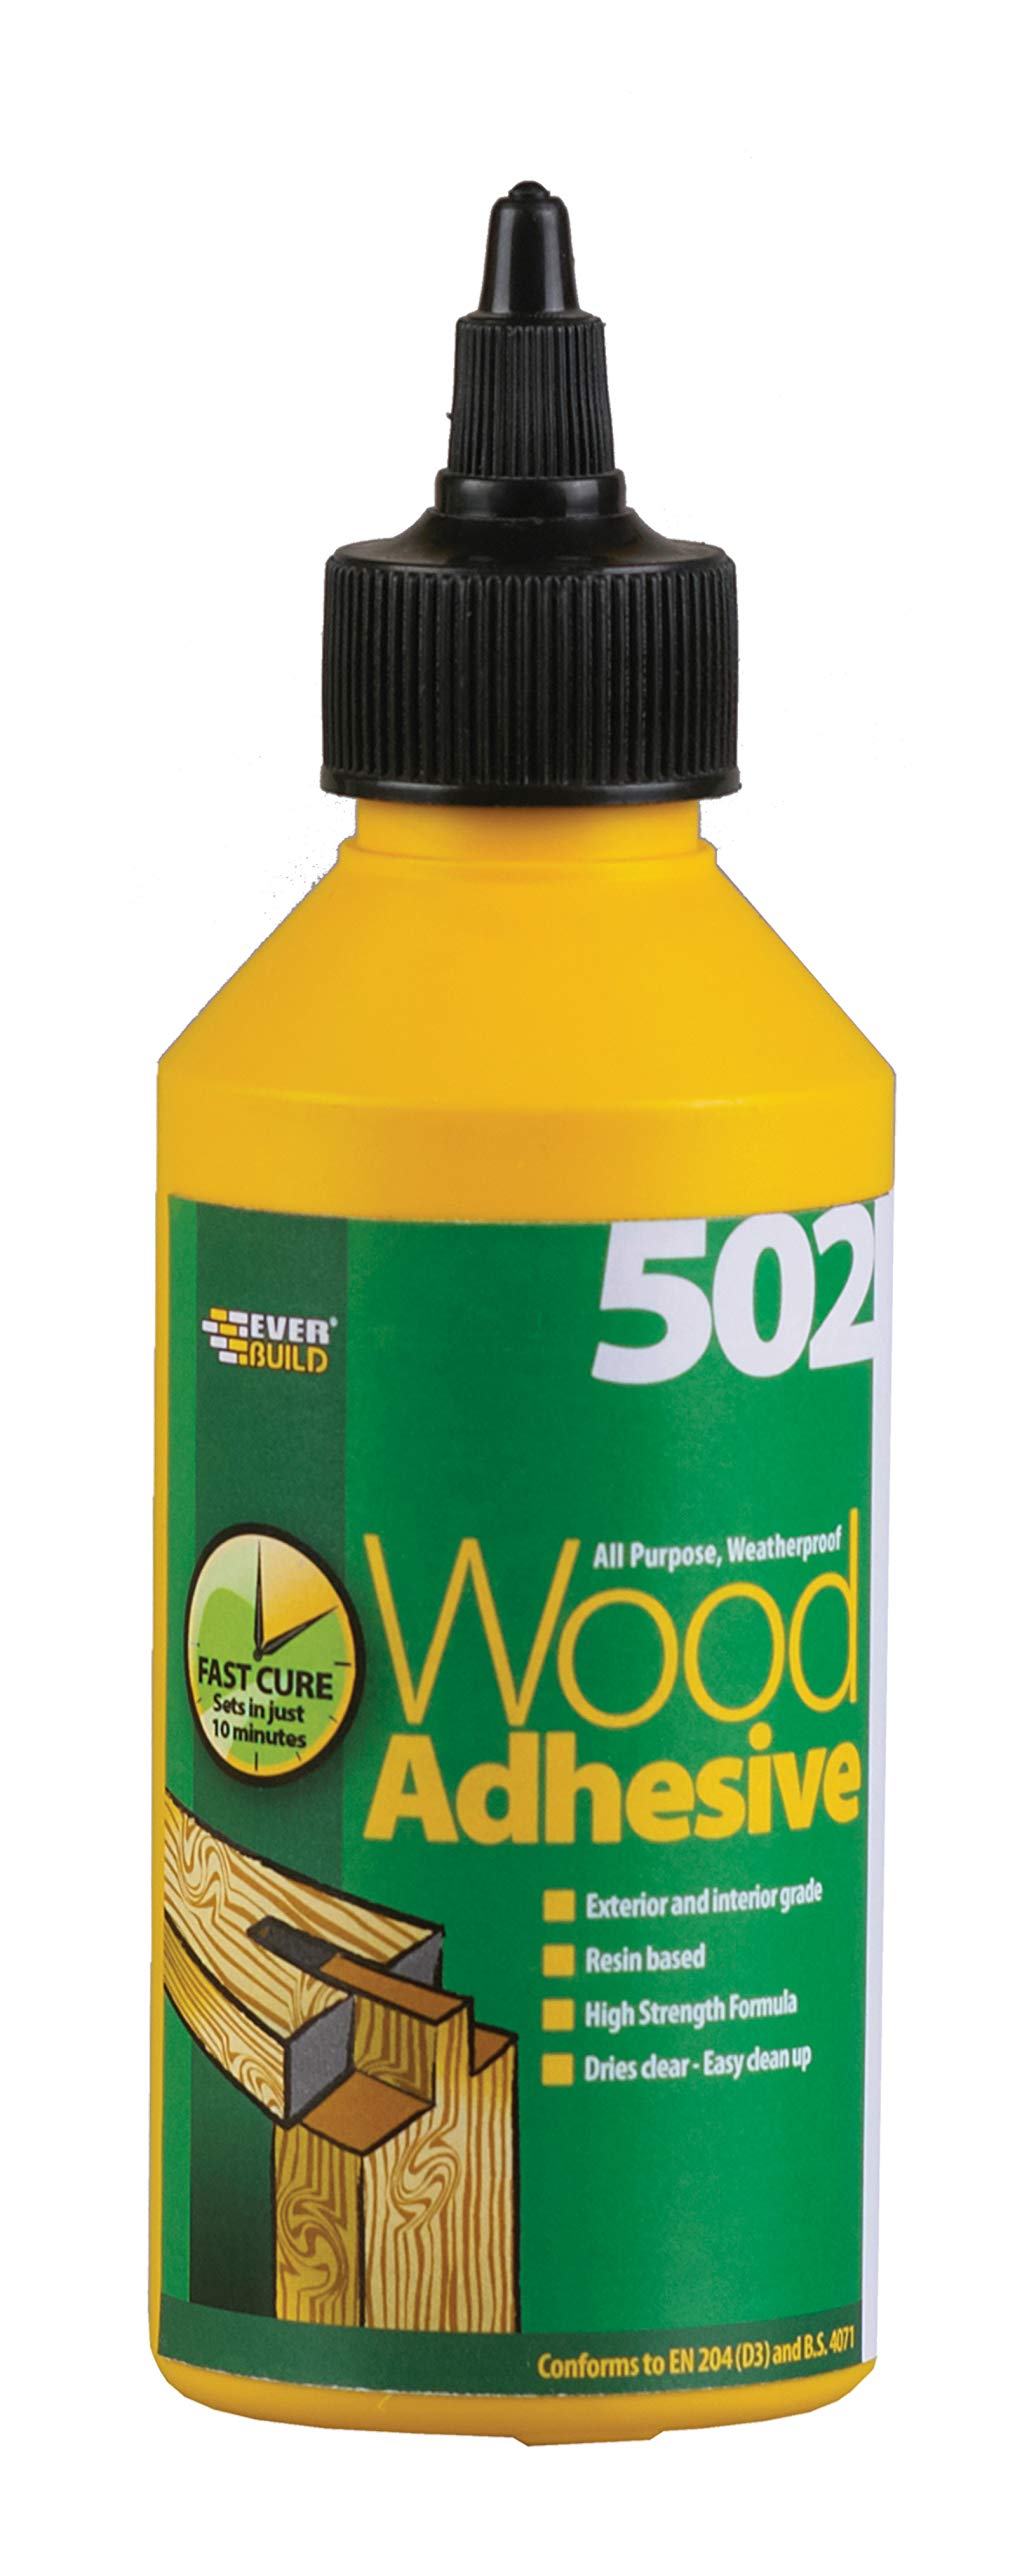 Everbuild 502 All Purpose Weatherproof Wood Adhesive - 250ml